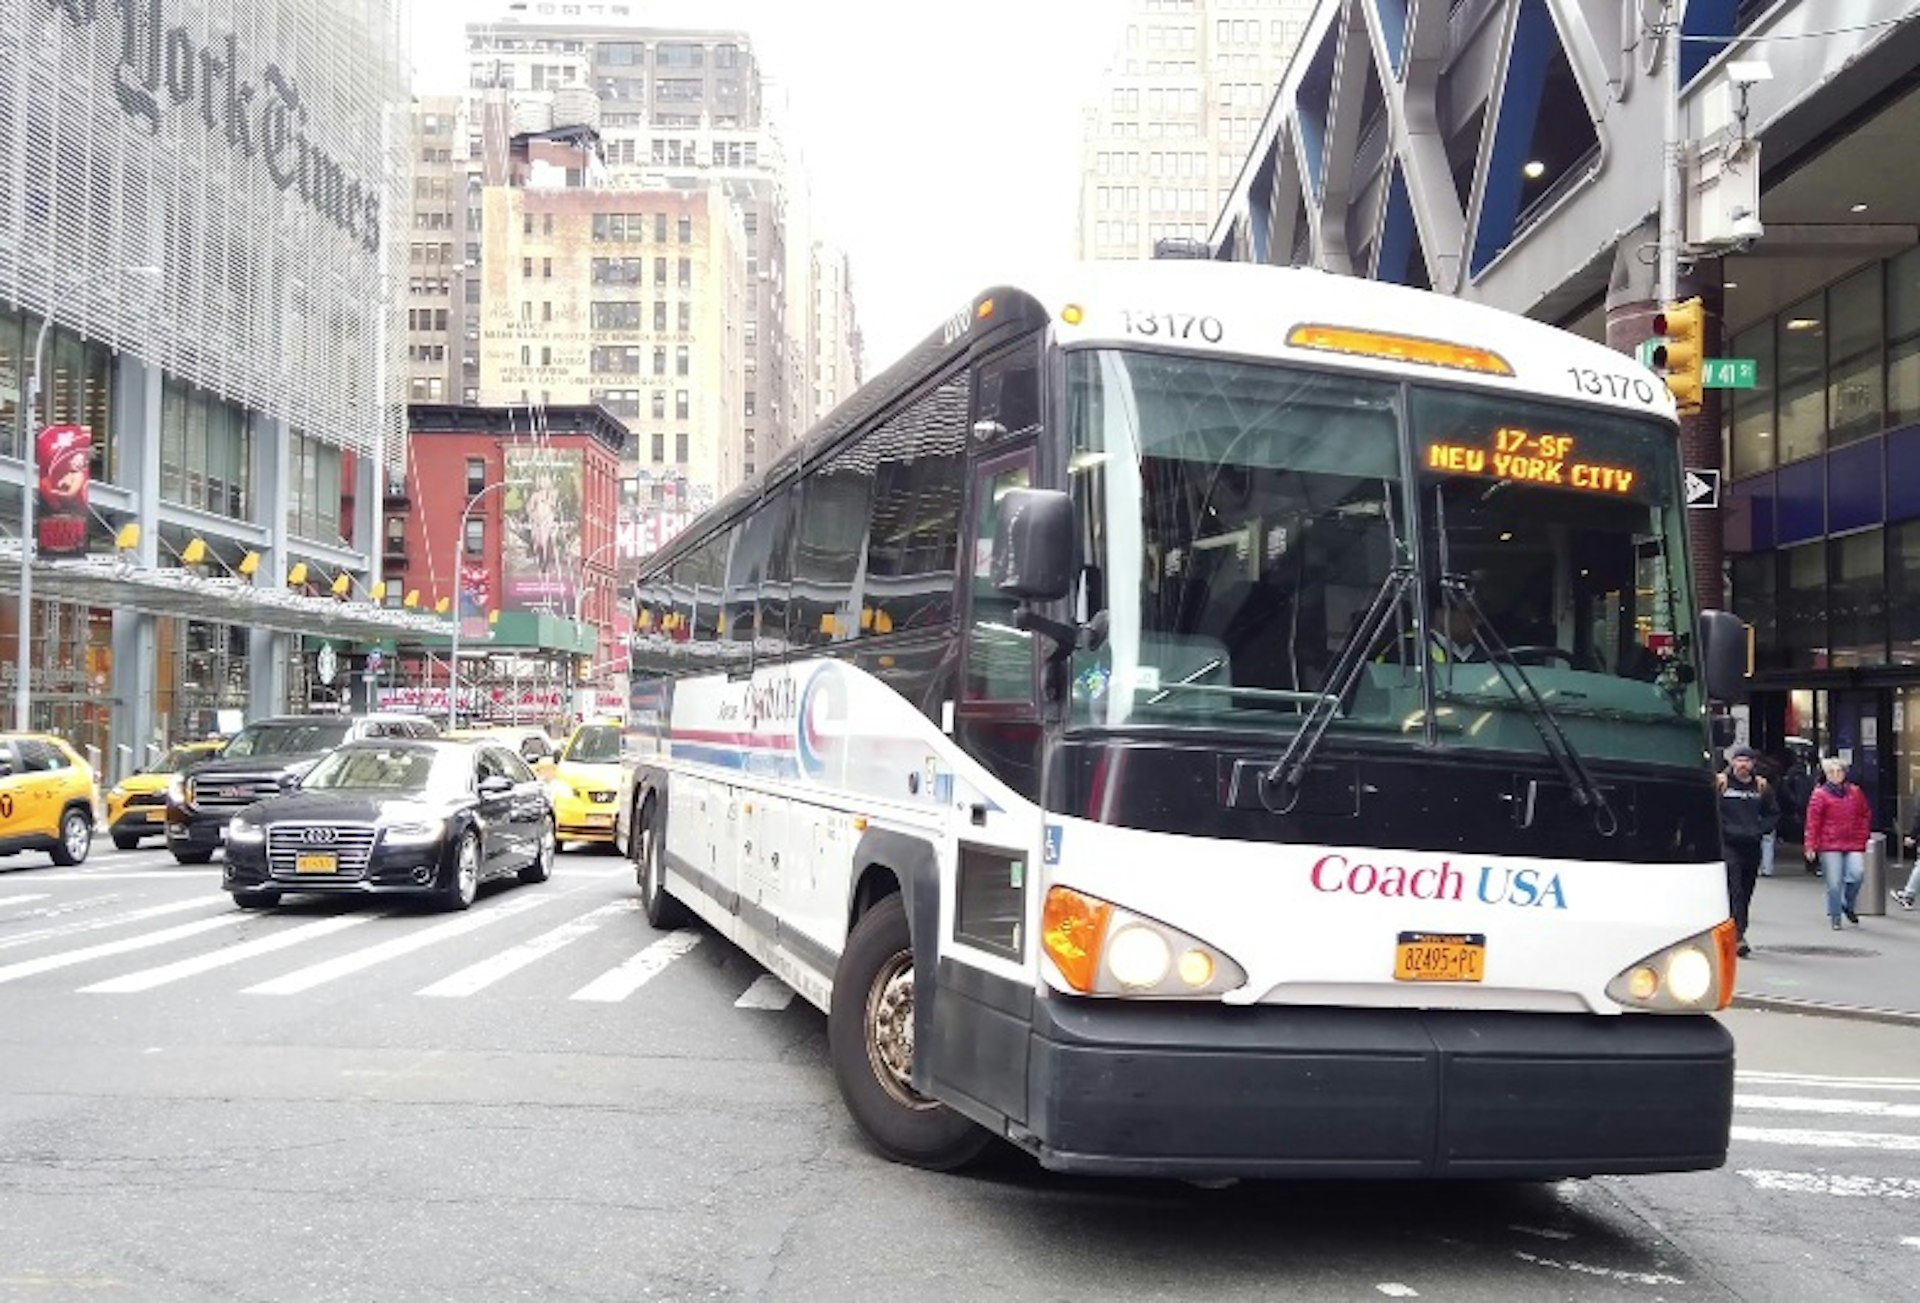 The Stewart International Airport bus pulls into Manhattan